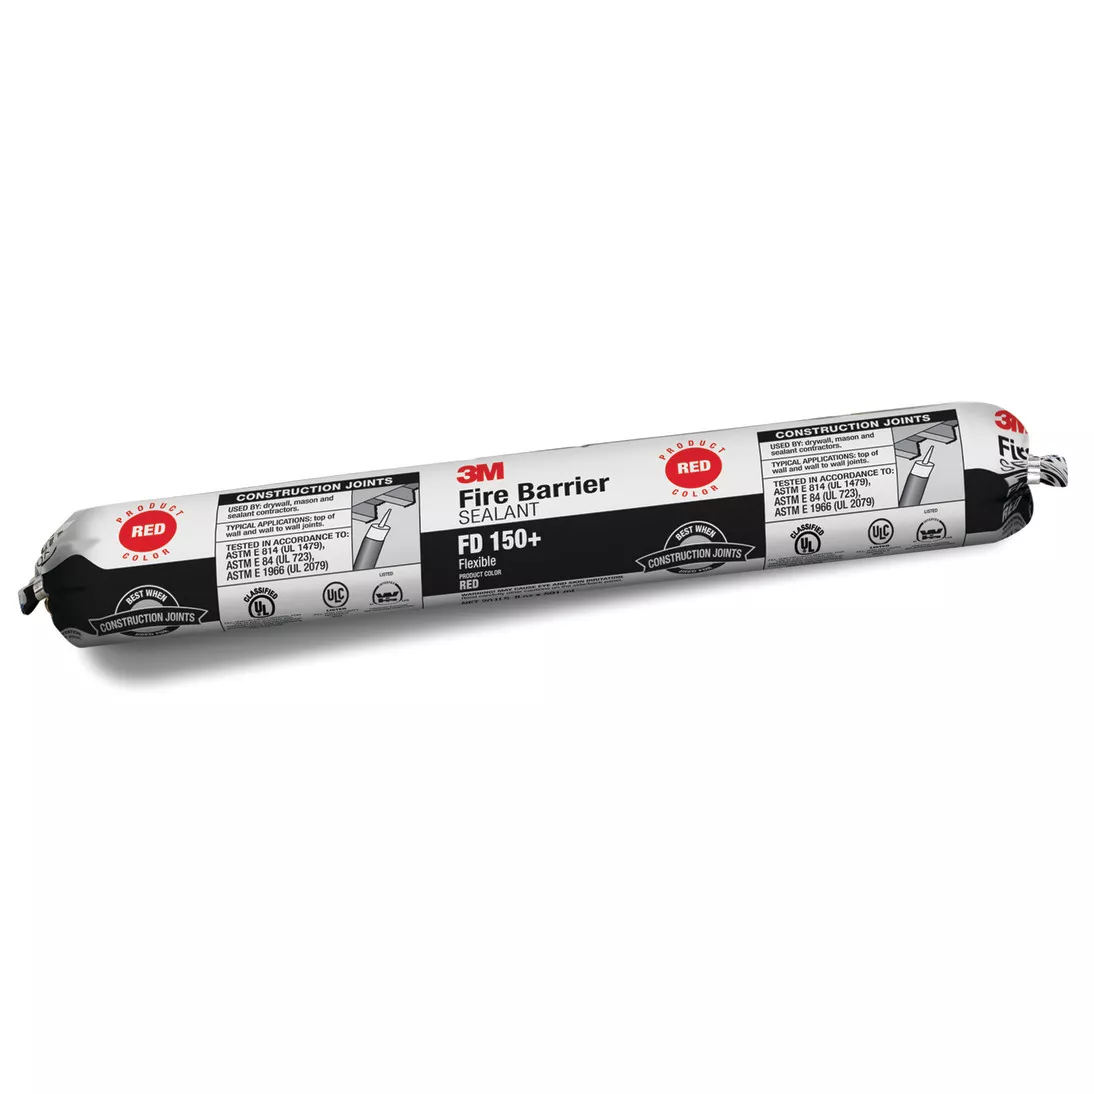 3M™ Fire Barrier Sealant FD 150+, Red, 20 fl oz Sausage Pack, 12/case